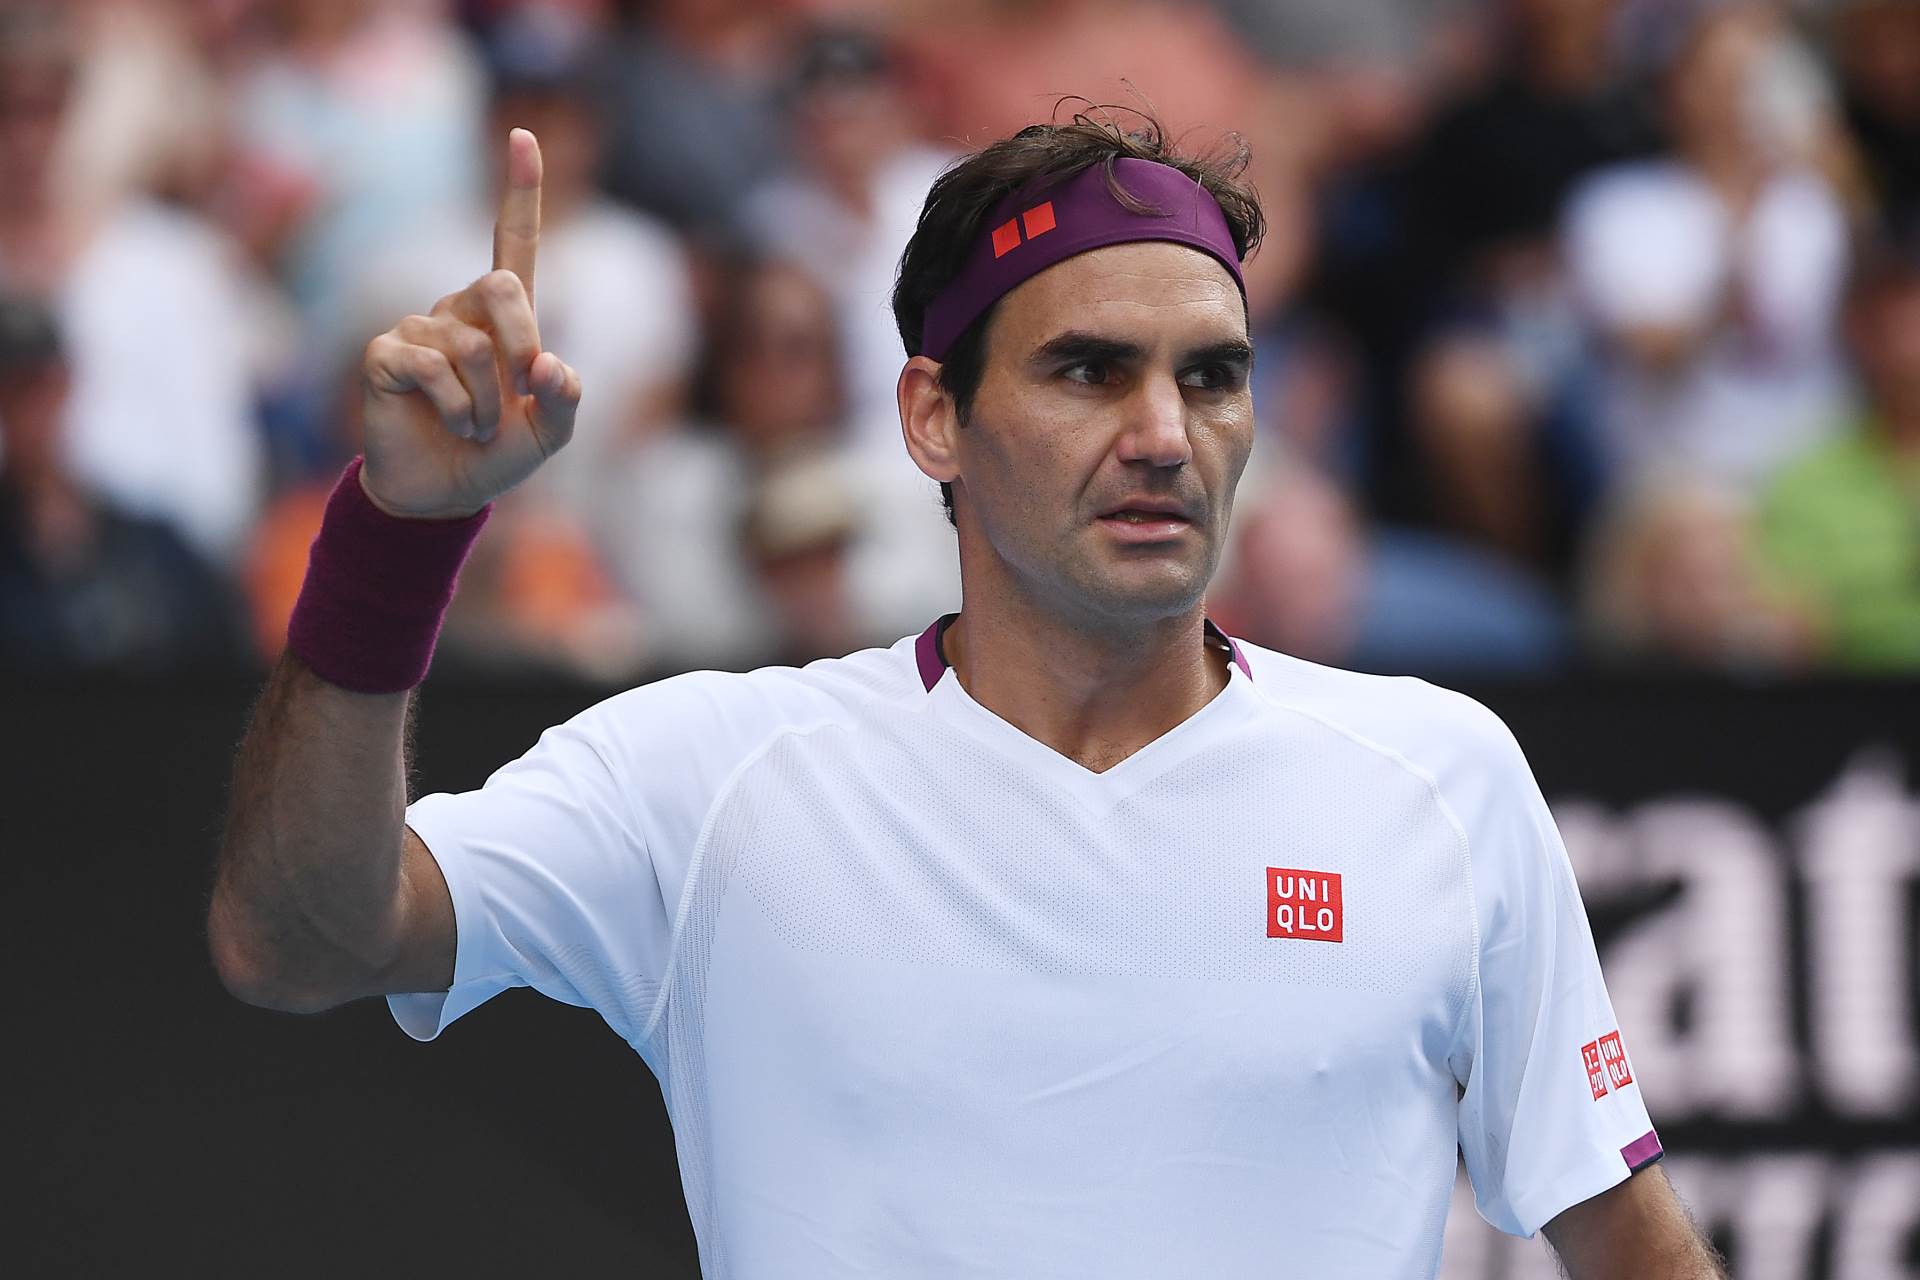  Rodzer-Federer-u-polufinale-Australijan-open-Tenis-Sandgren-pet-setova-povredjen 